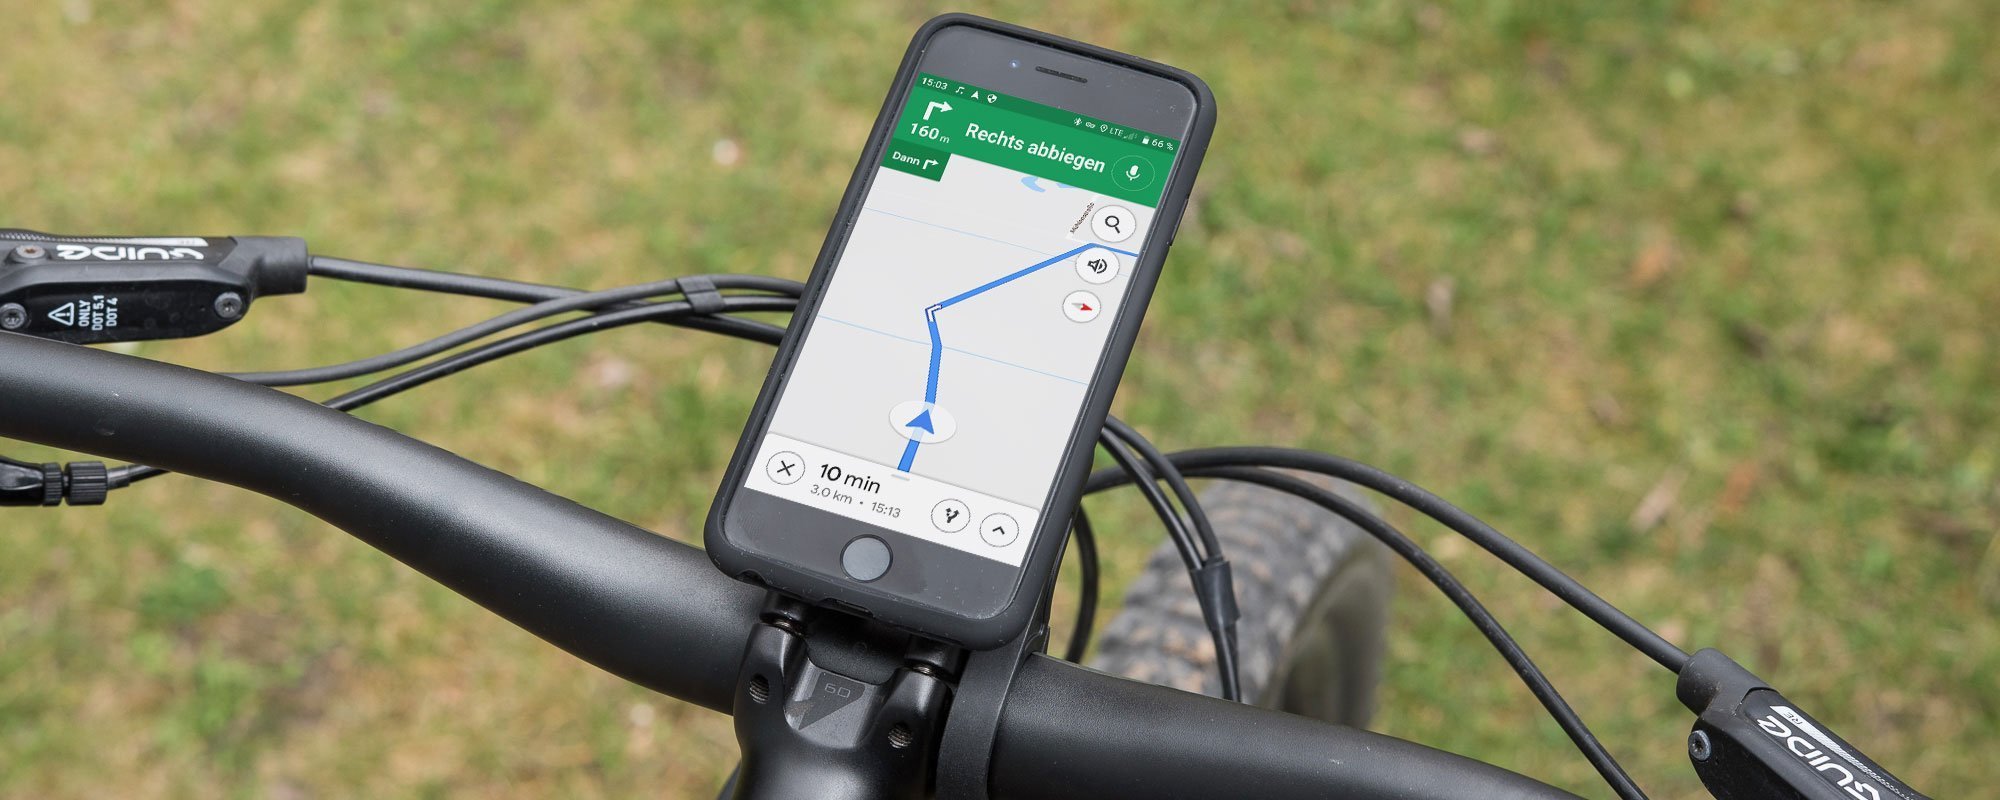 beste fahrrad navigation iphone